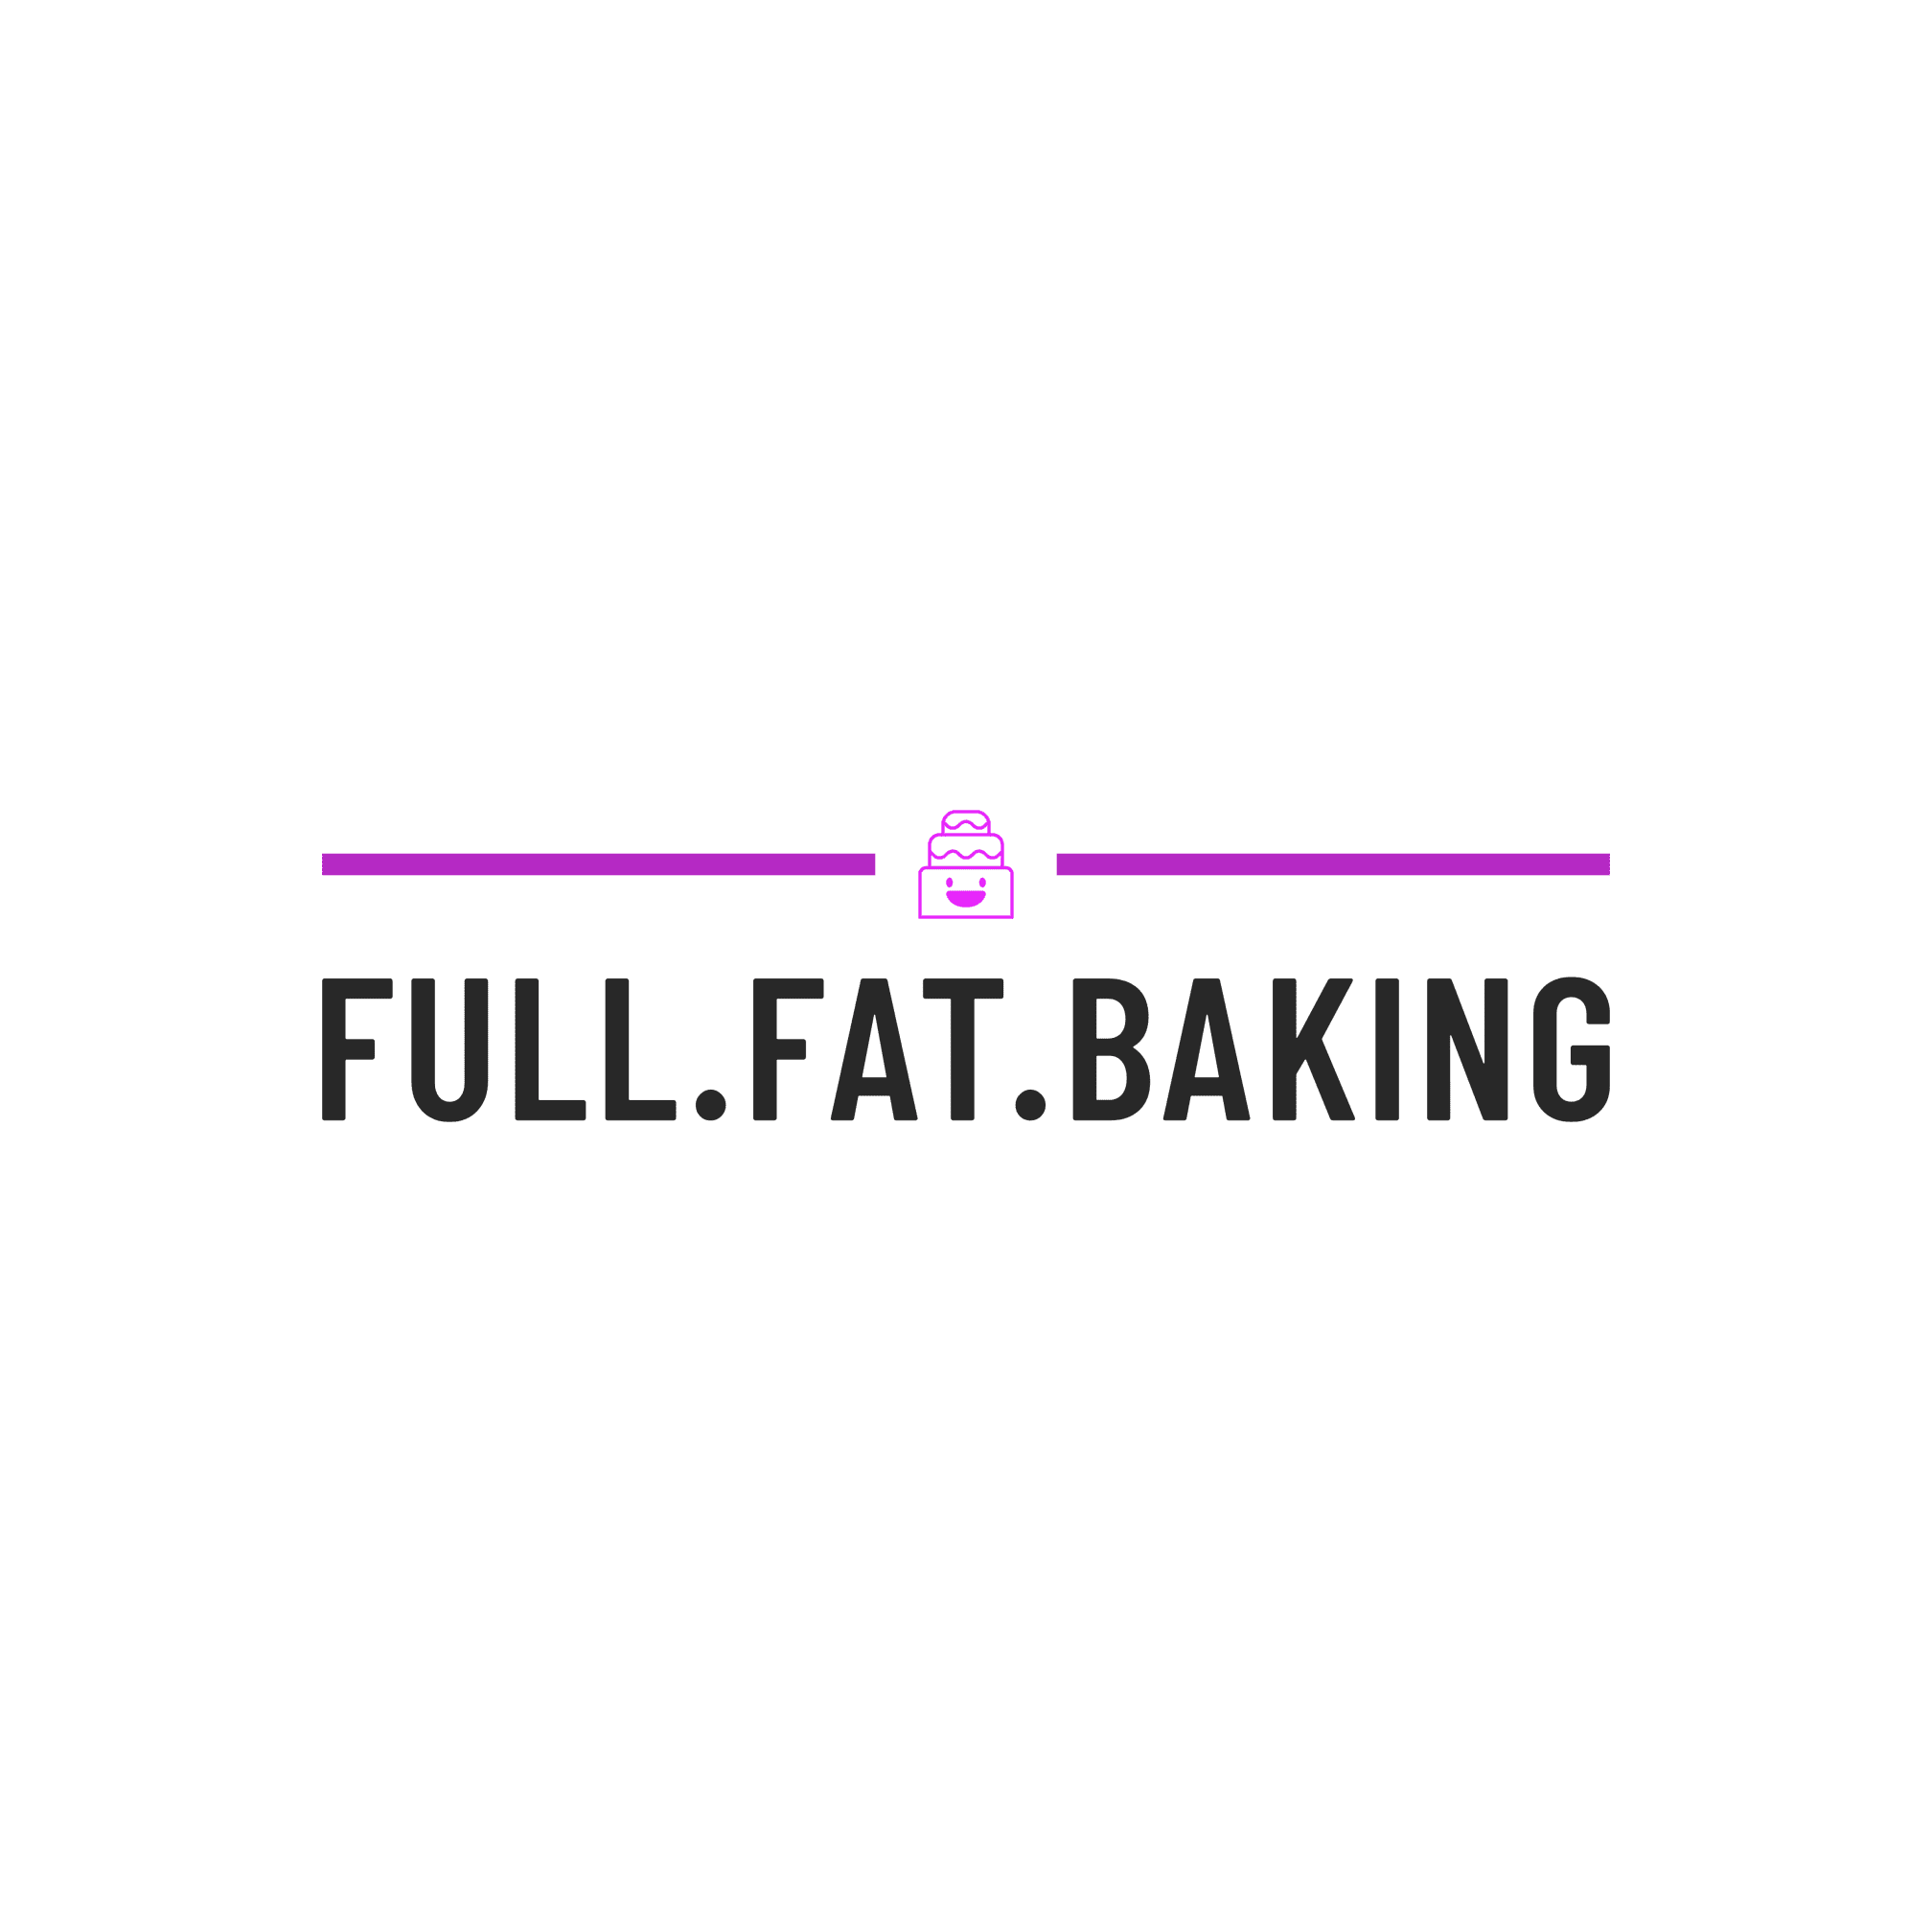 Full Fat Baking - Romsey, Hampshire - 07707 541477 | ShowMeLocal.com